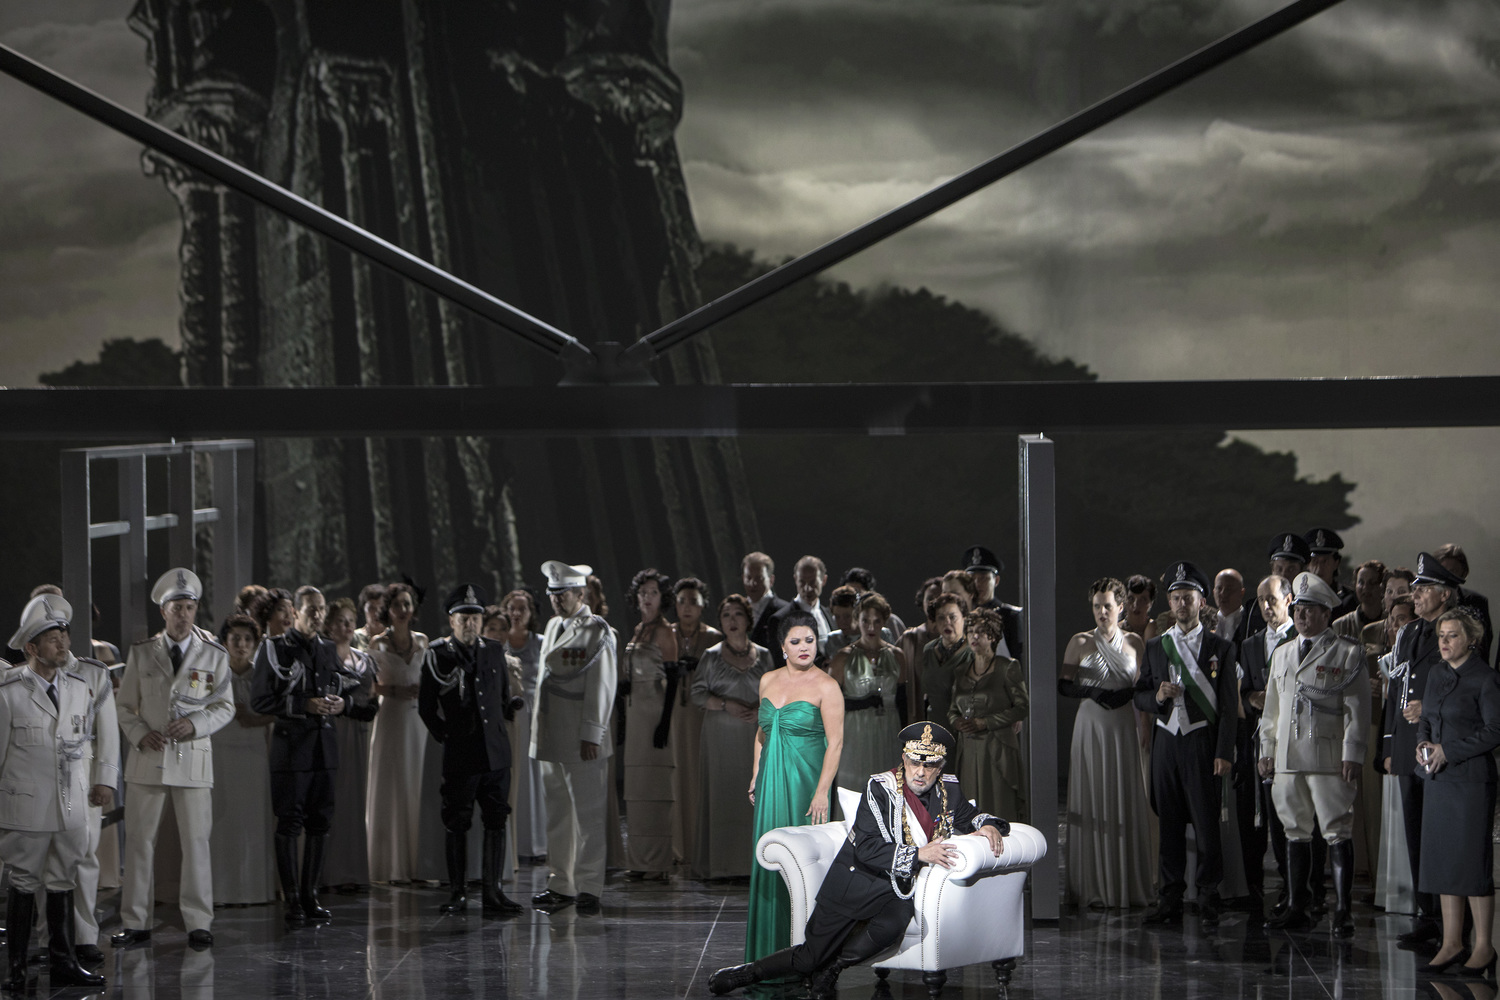 Review: MACBETH at STAATSOPER UNTER DEN LINDEN - Superstars Netrebko and Domingo miscast in a glittering new production of Verdi's MACBETH 